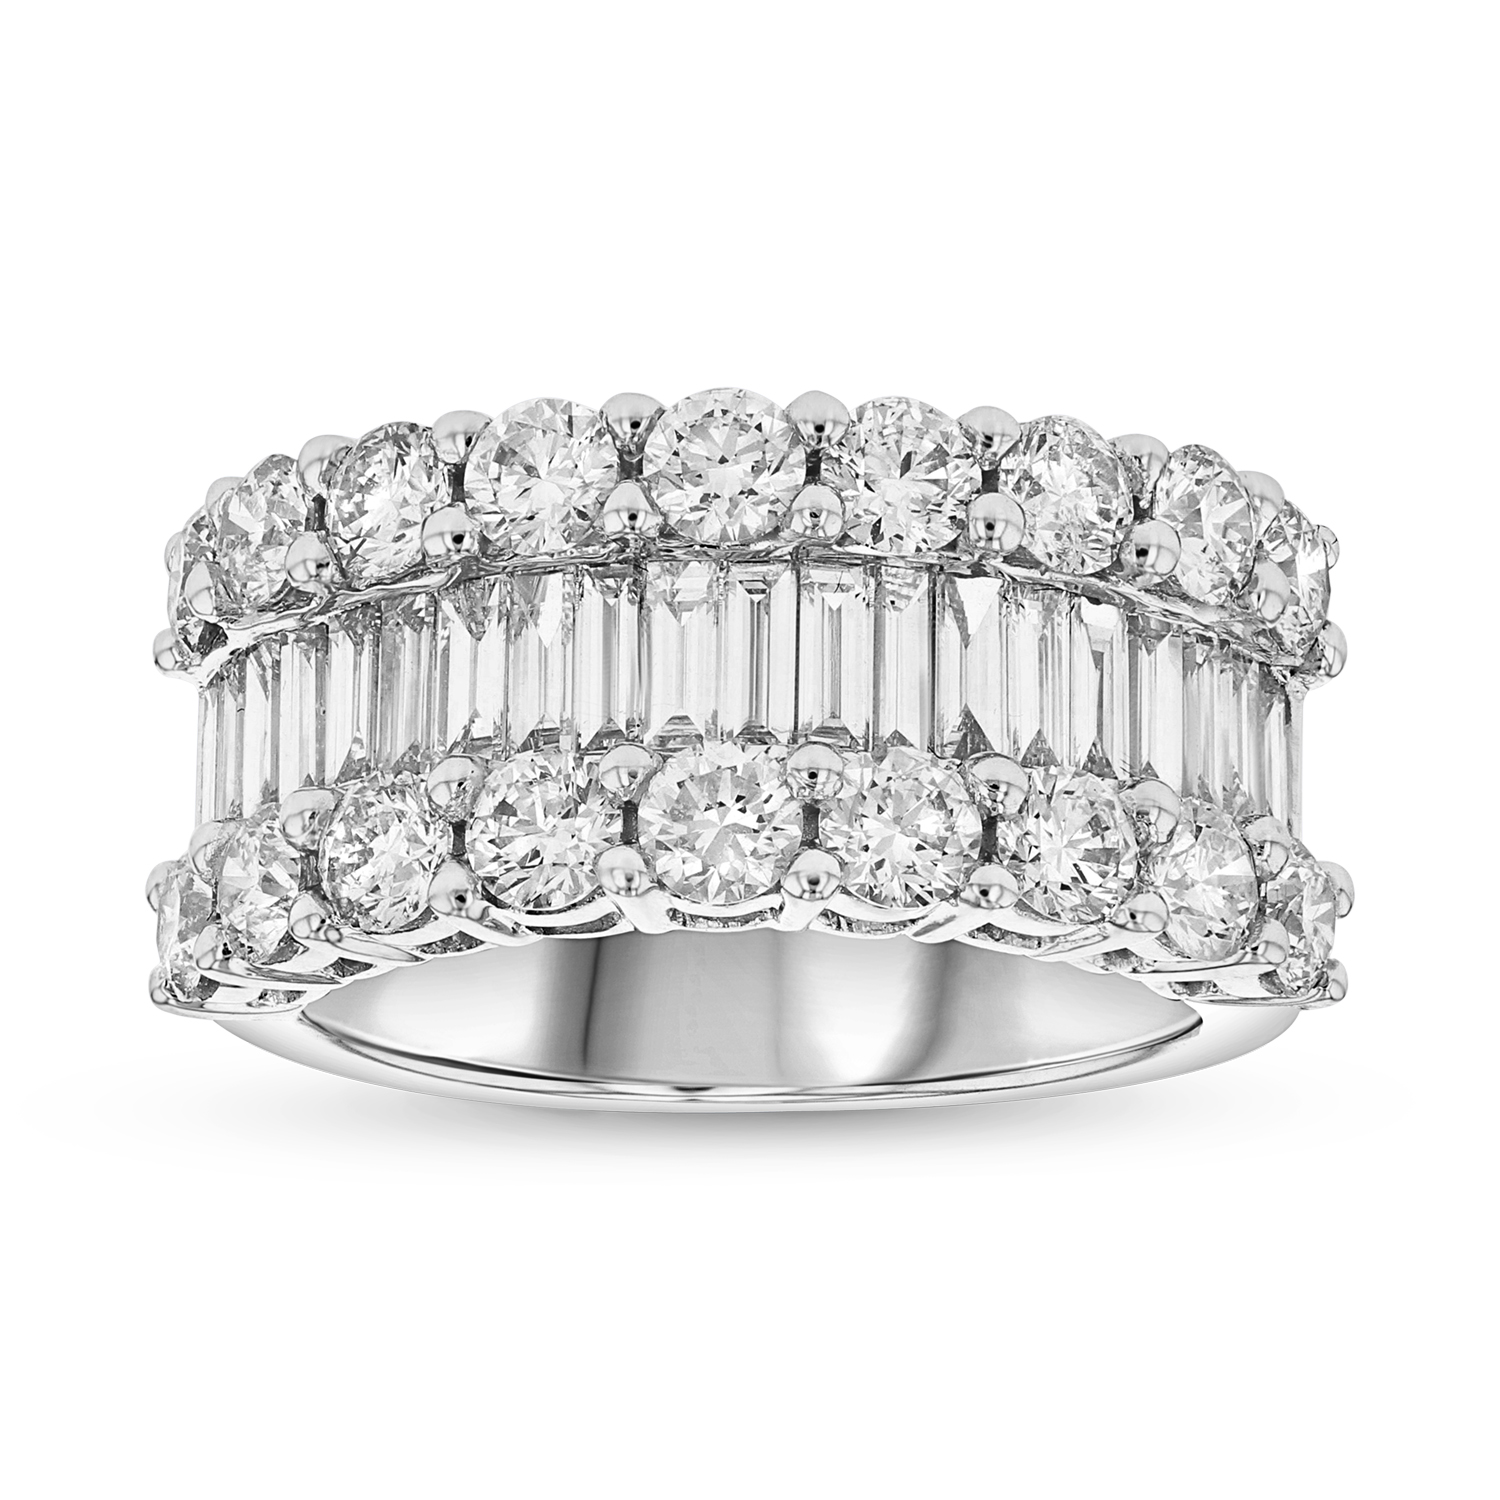 View 3.50ctw Diamond Fashion Ring in 18k White Gold